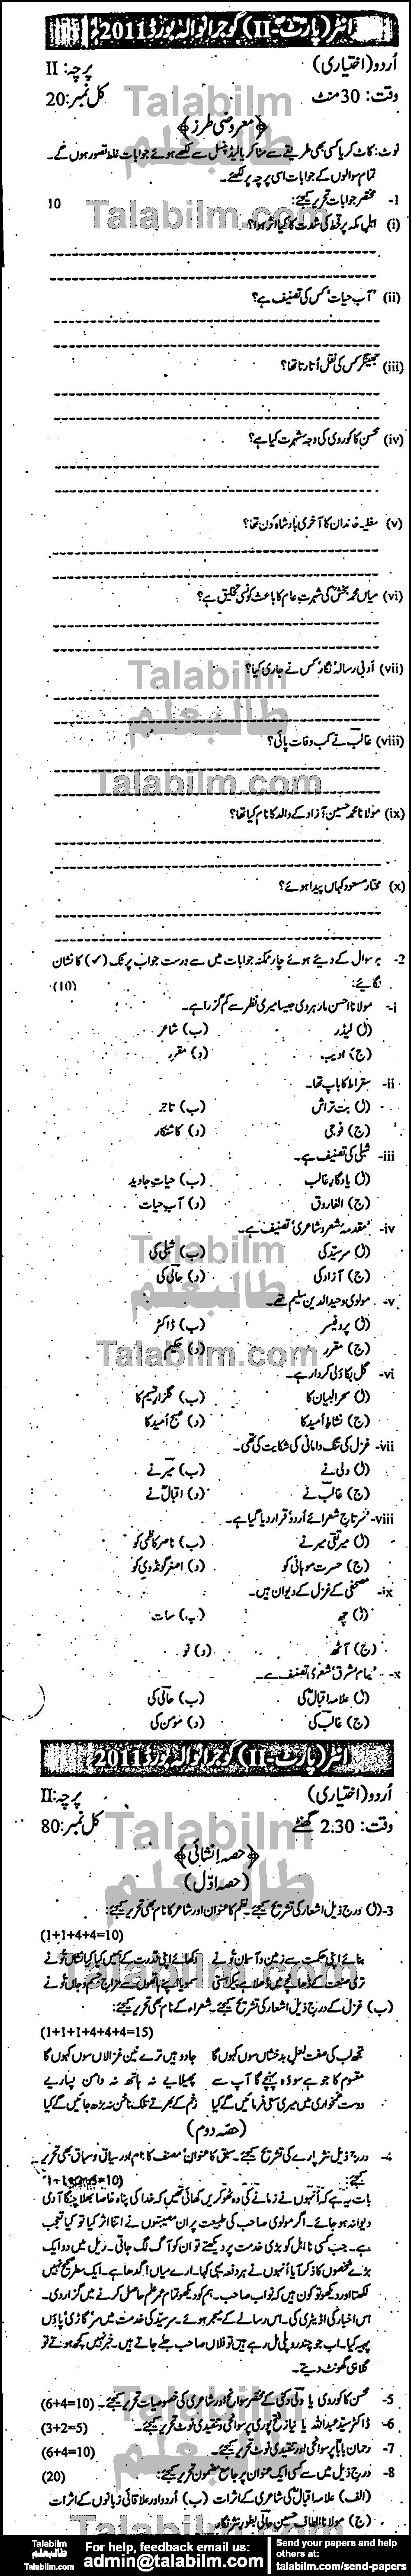 Urdu 0 past paper for Group-I 2011